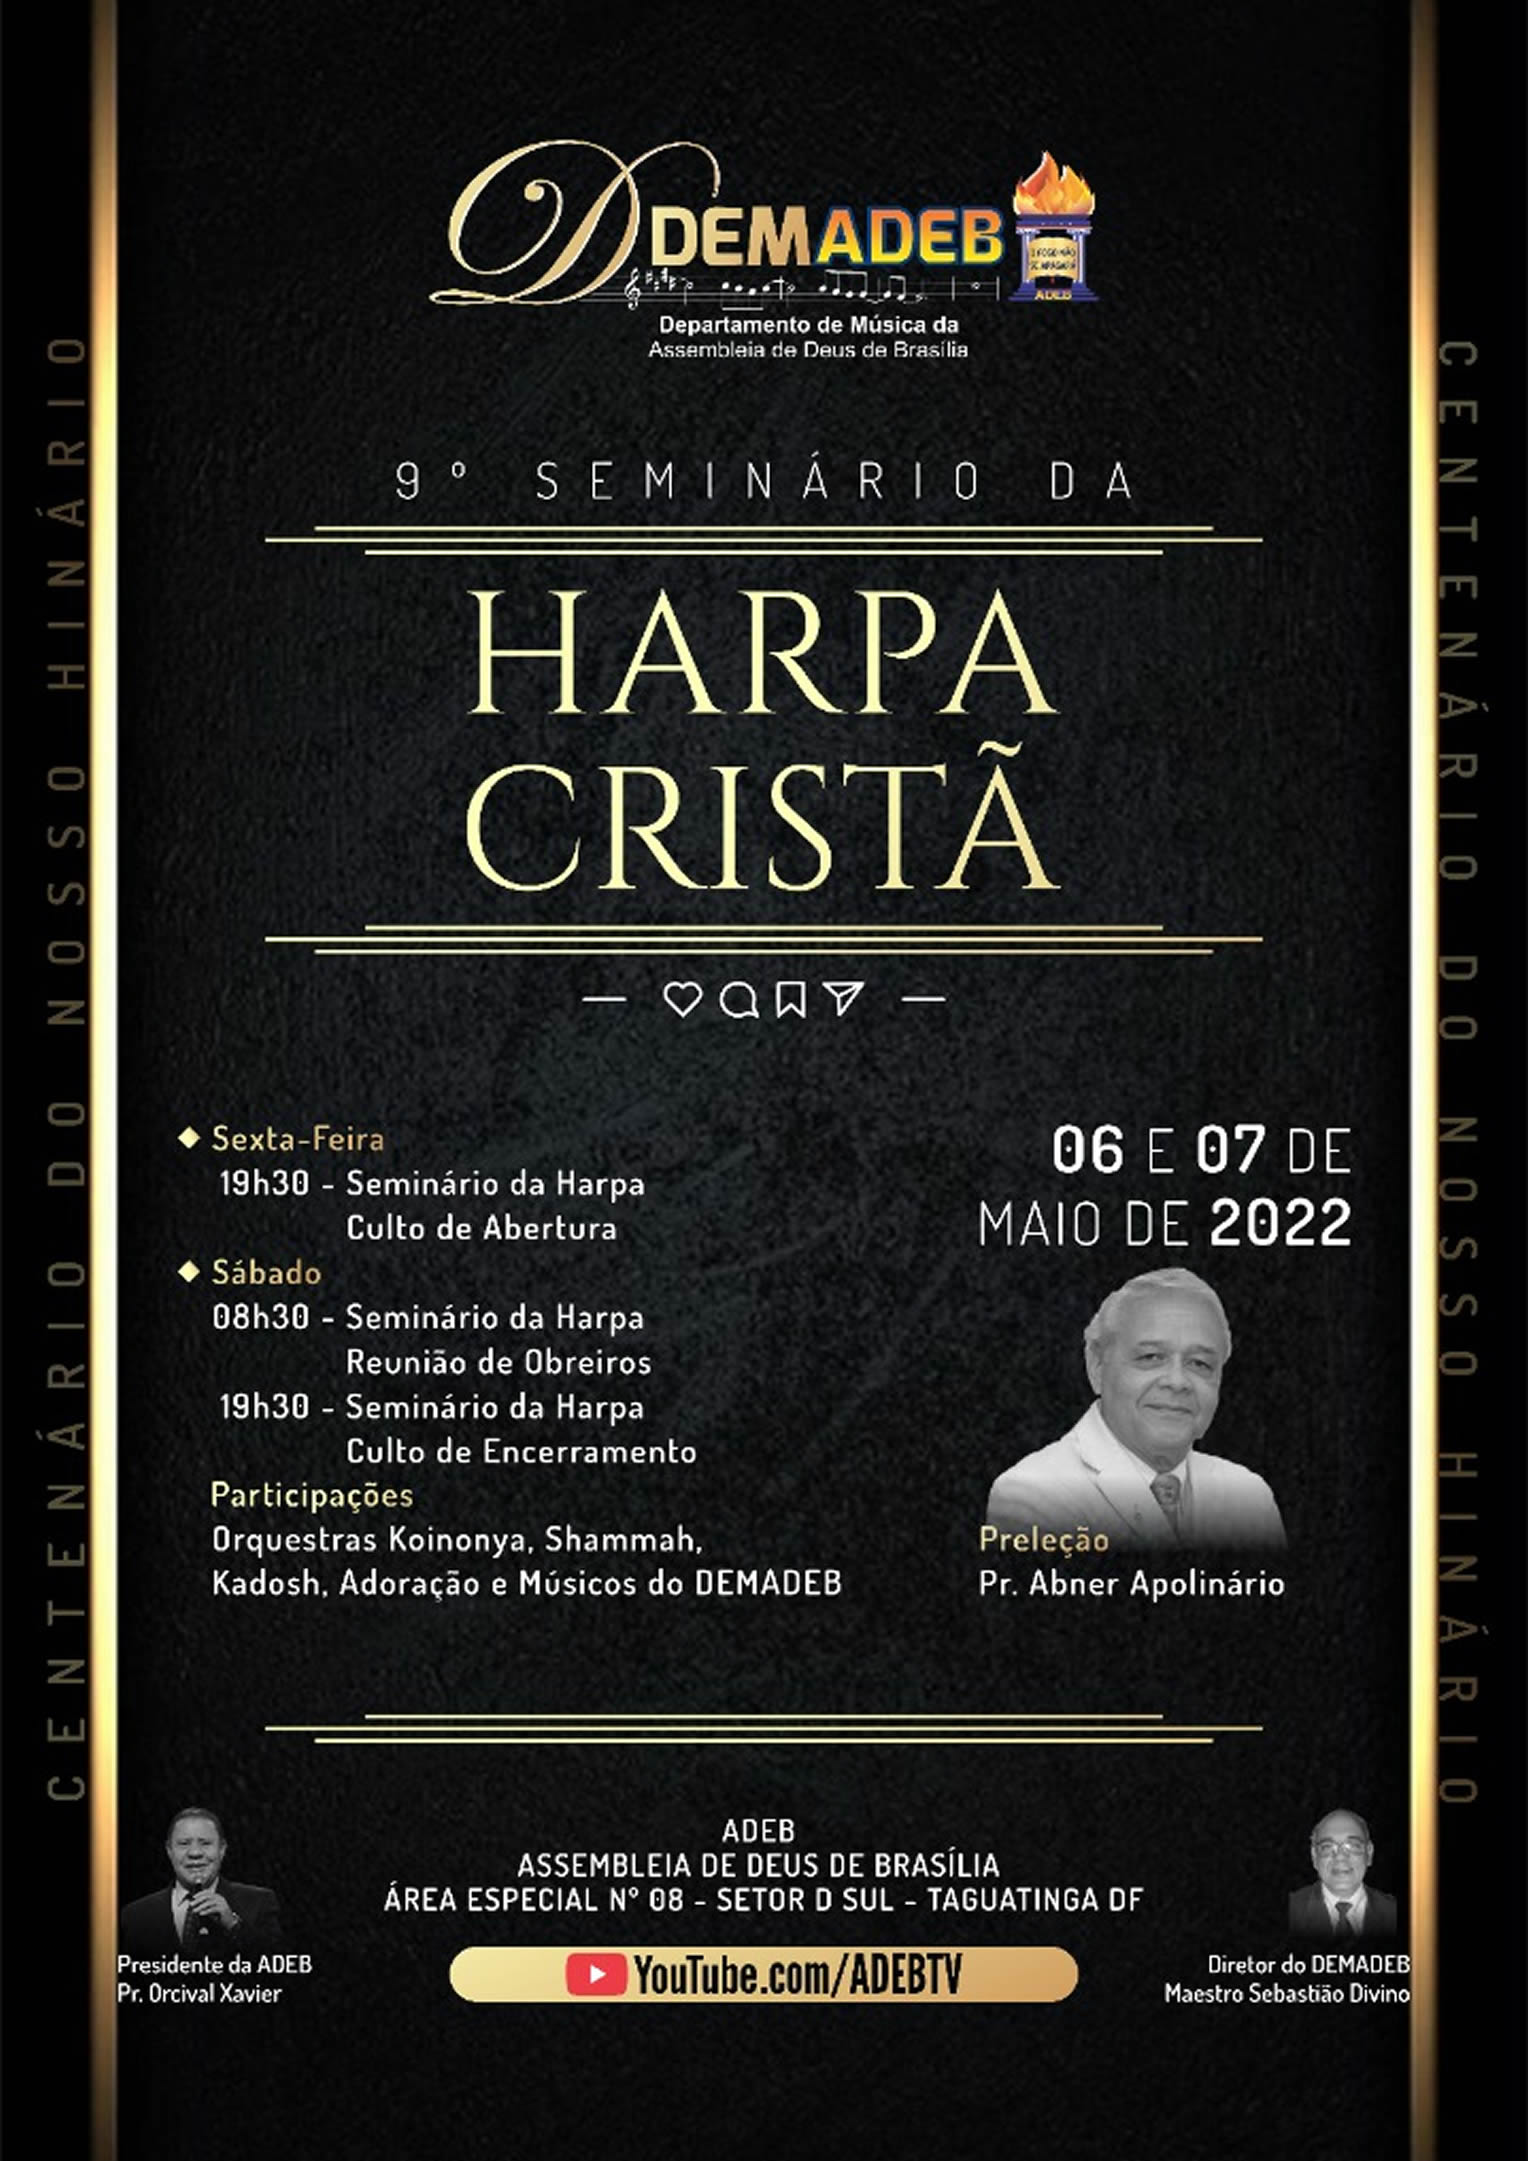 9º Seminário da Harpa Cristã